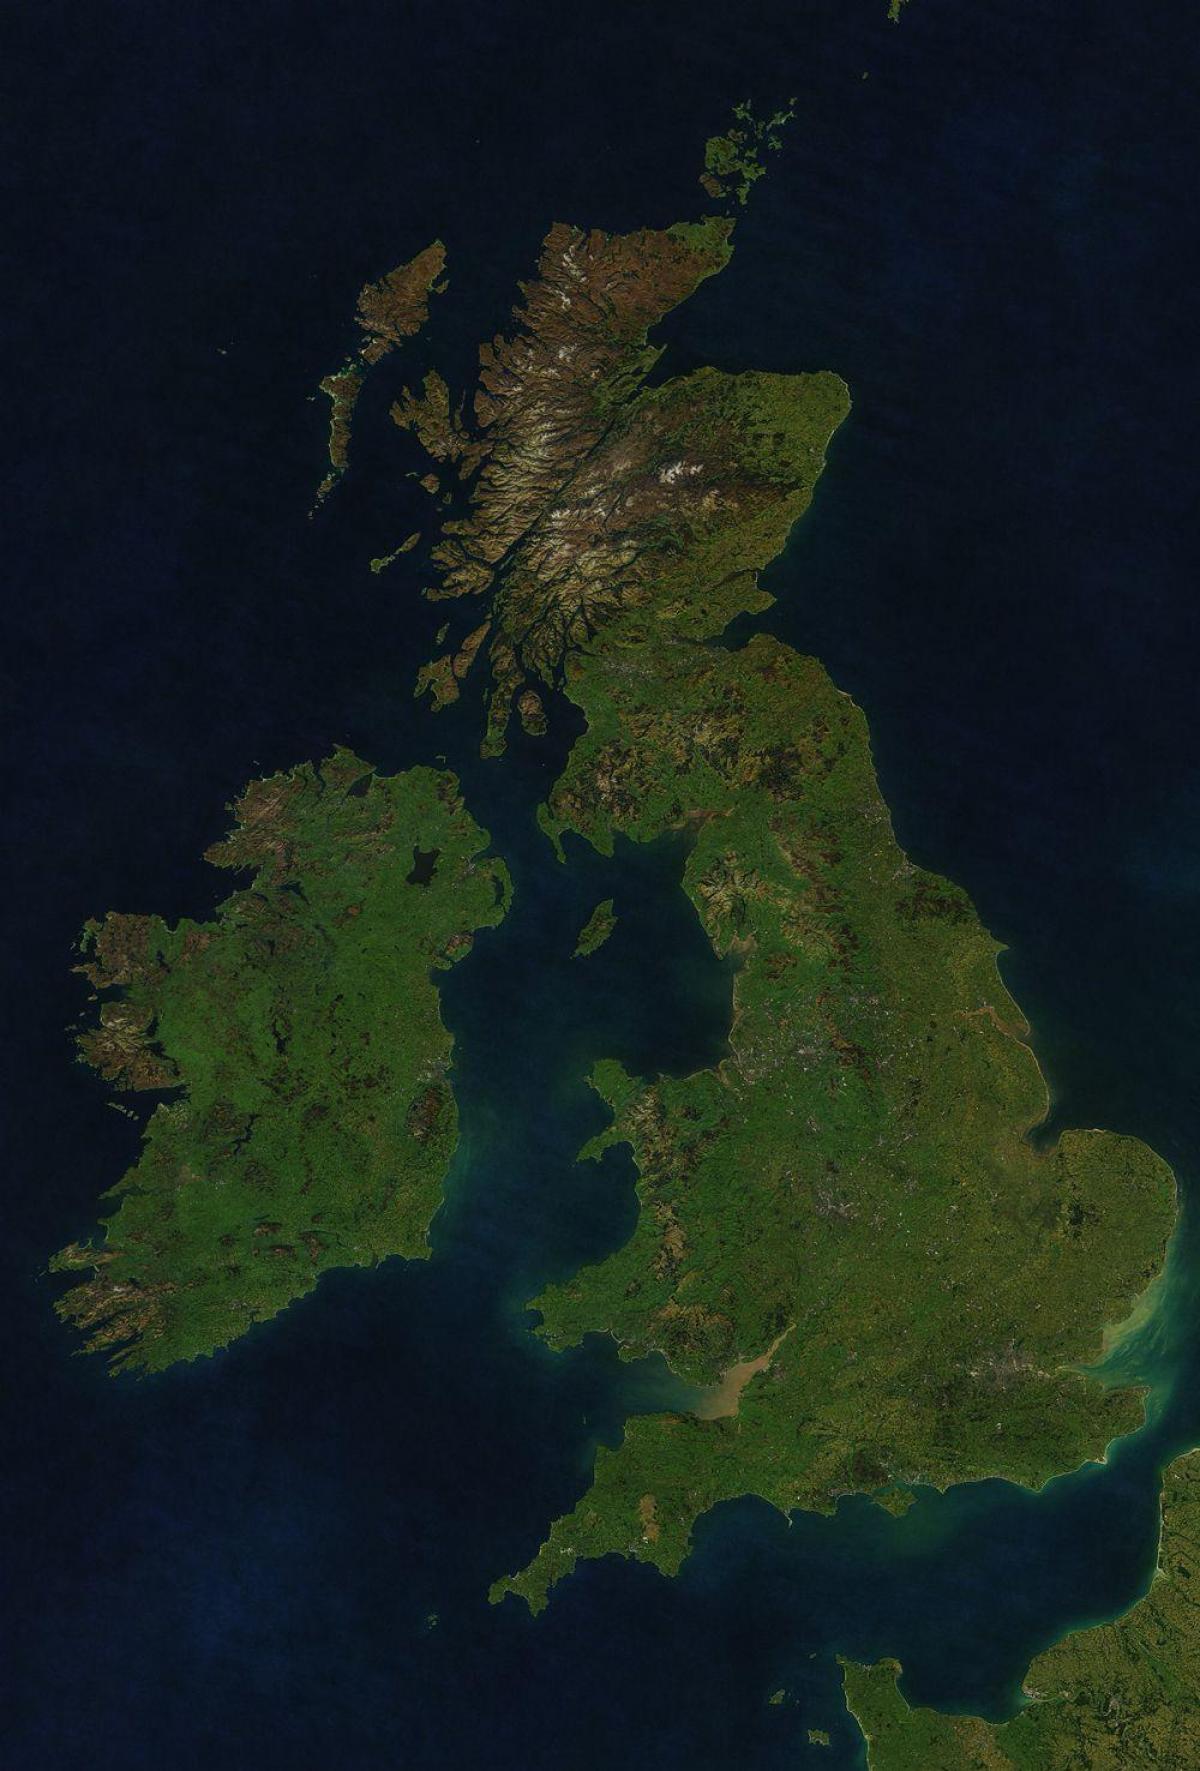 United Kingdom (UK) sky view map